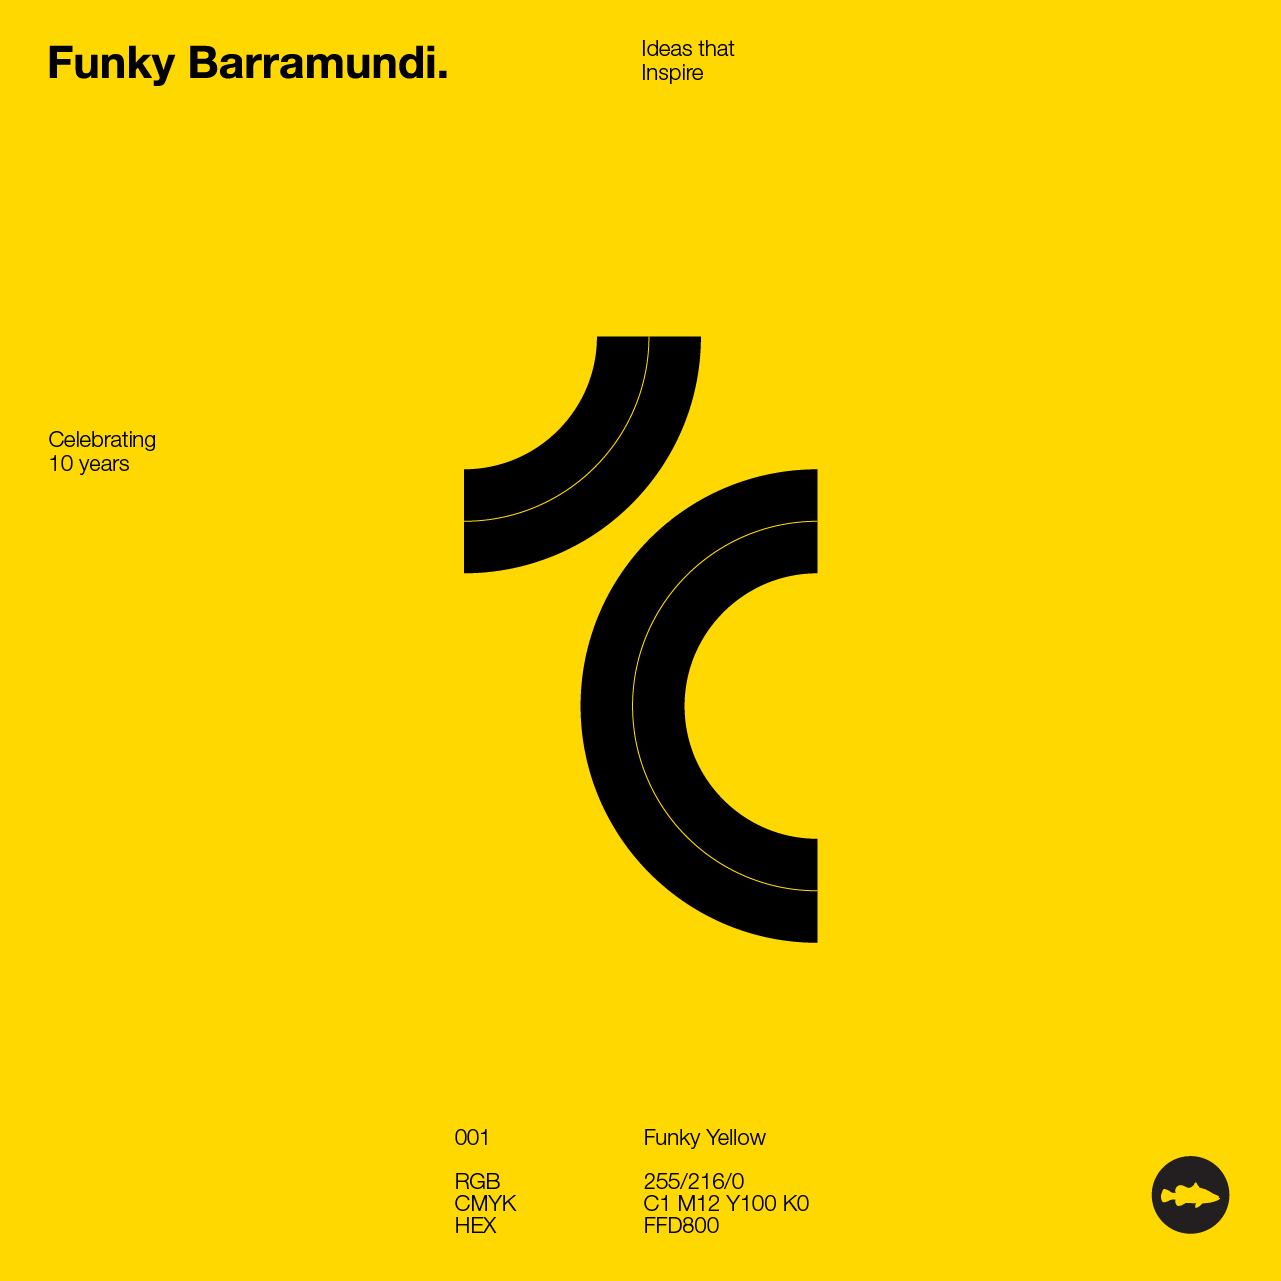 NEWS FLASH: Funky Barramundi turns 10!